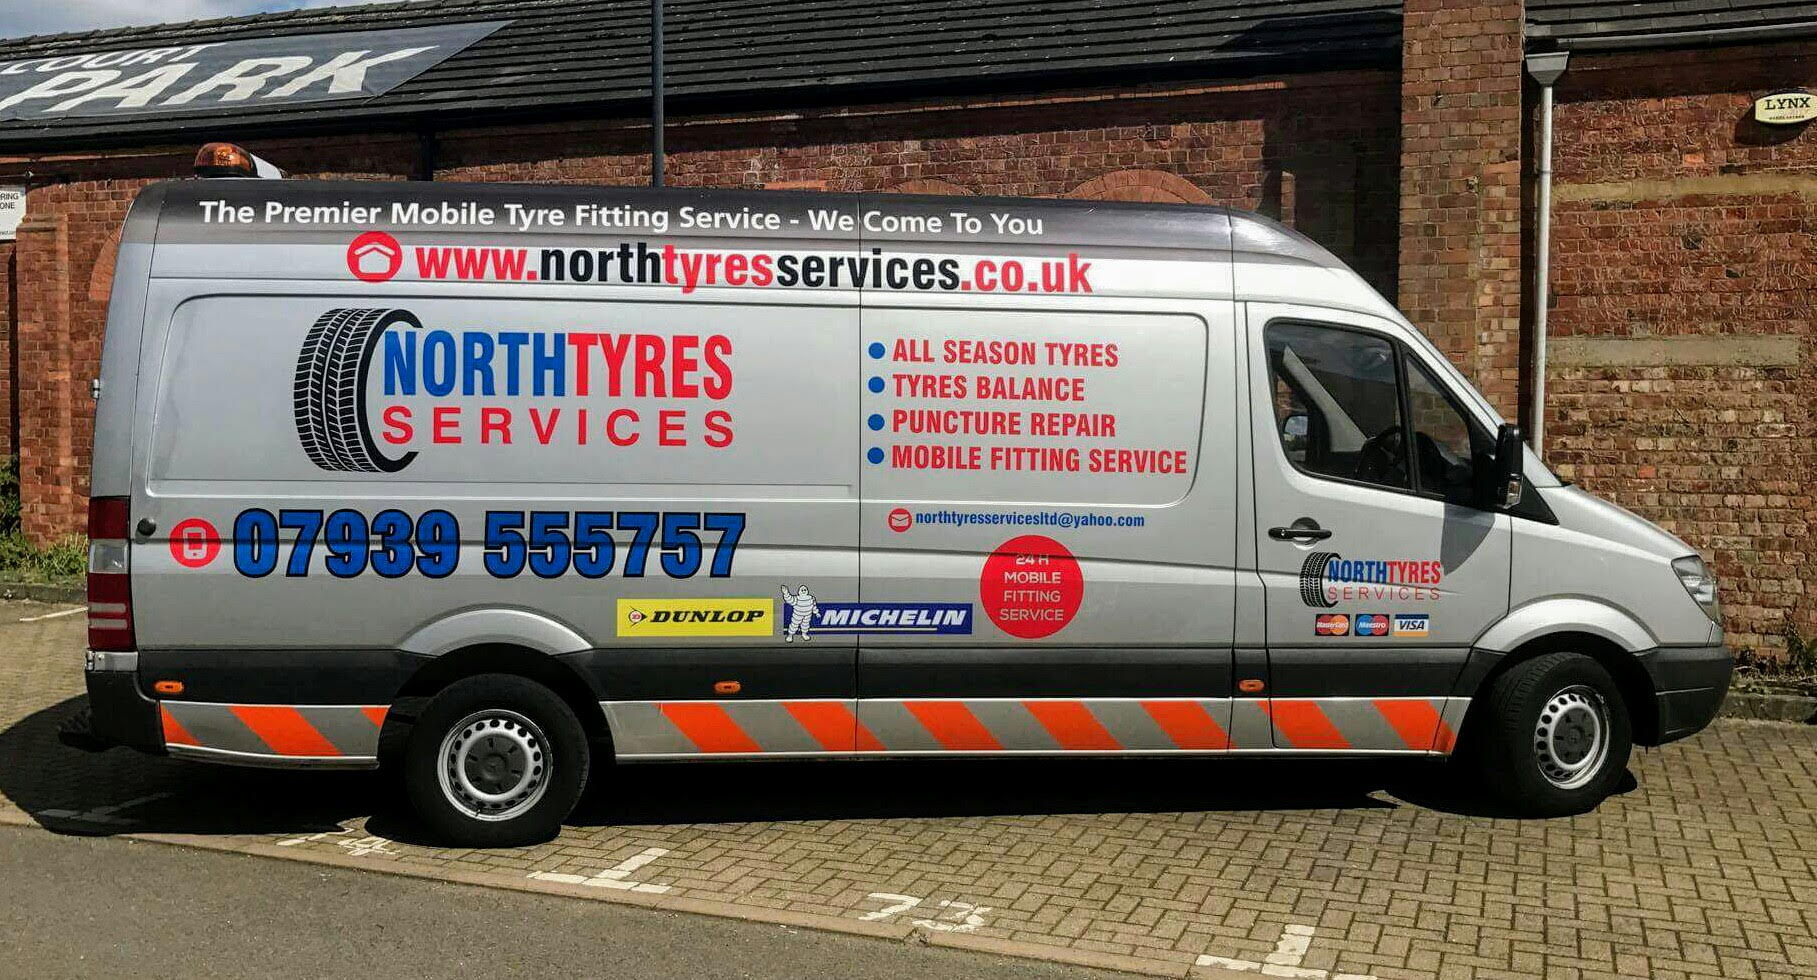 Nort tyres service services